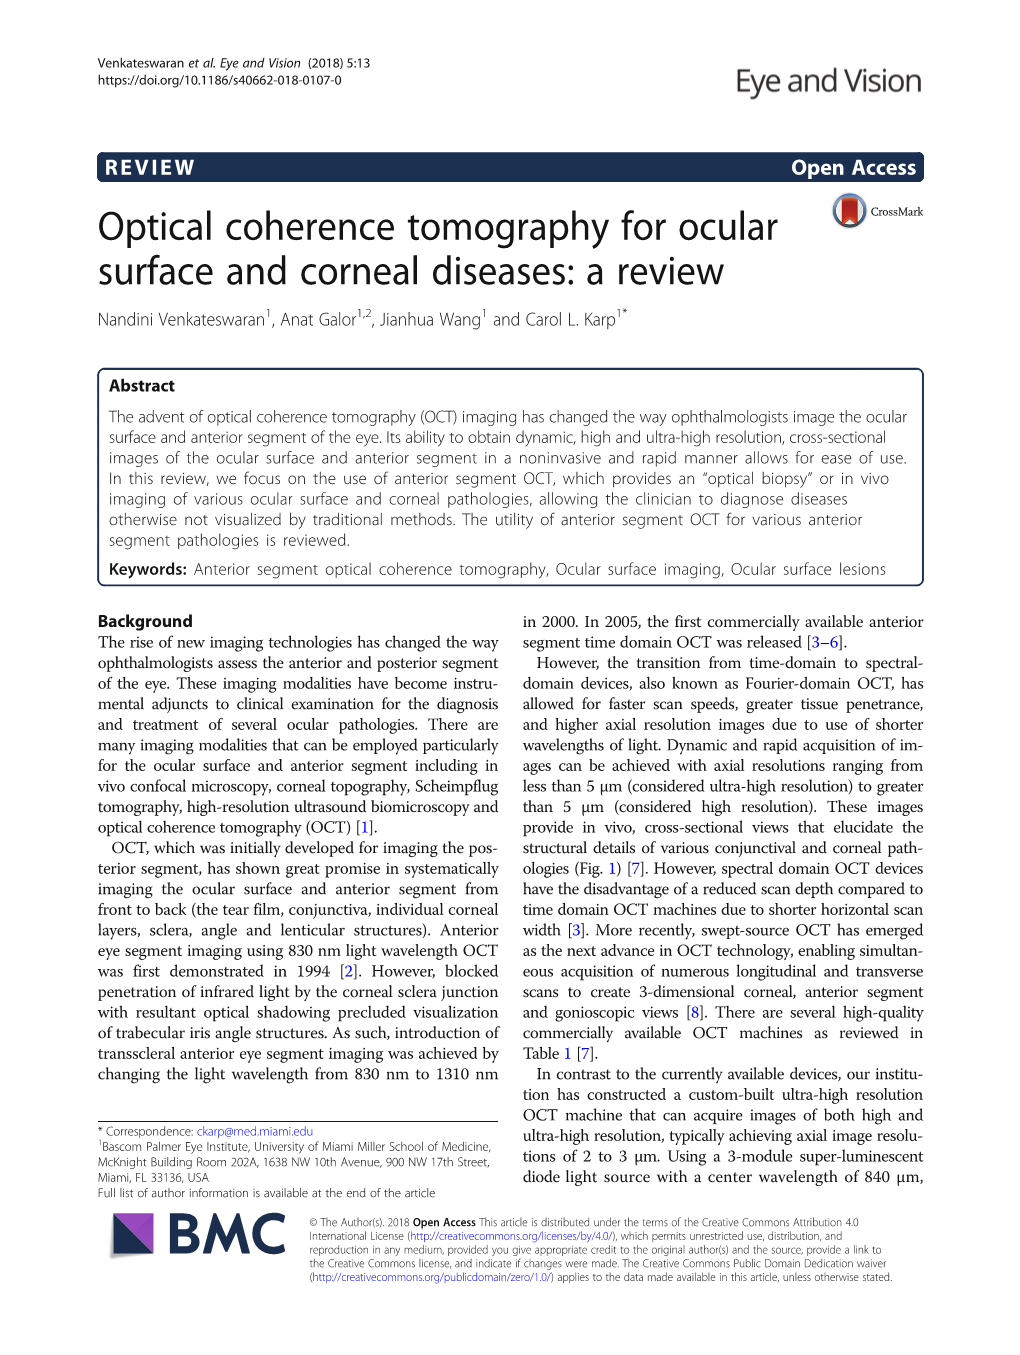 Optical Coherence Tomography for Ocular Surface and Corneal Diseases: a Review Nandini Venkateswaran1, Anat Galor1,2, Jianhua Wang1 and Carol L